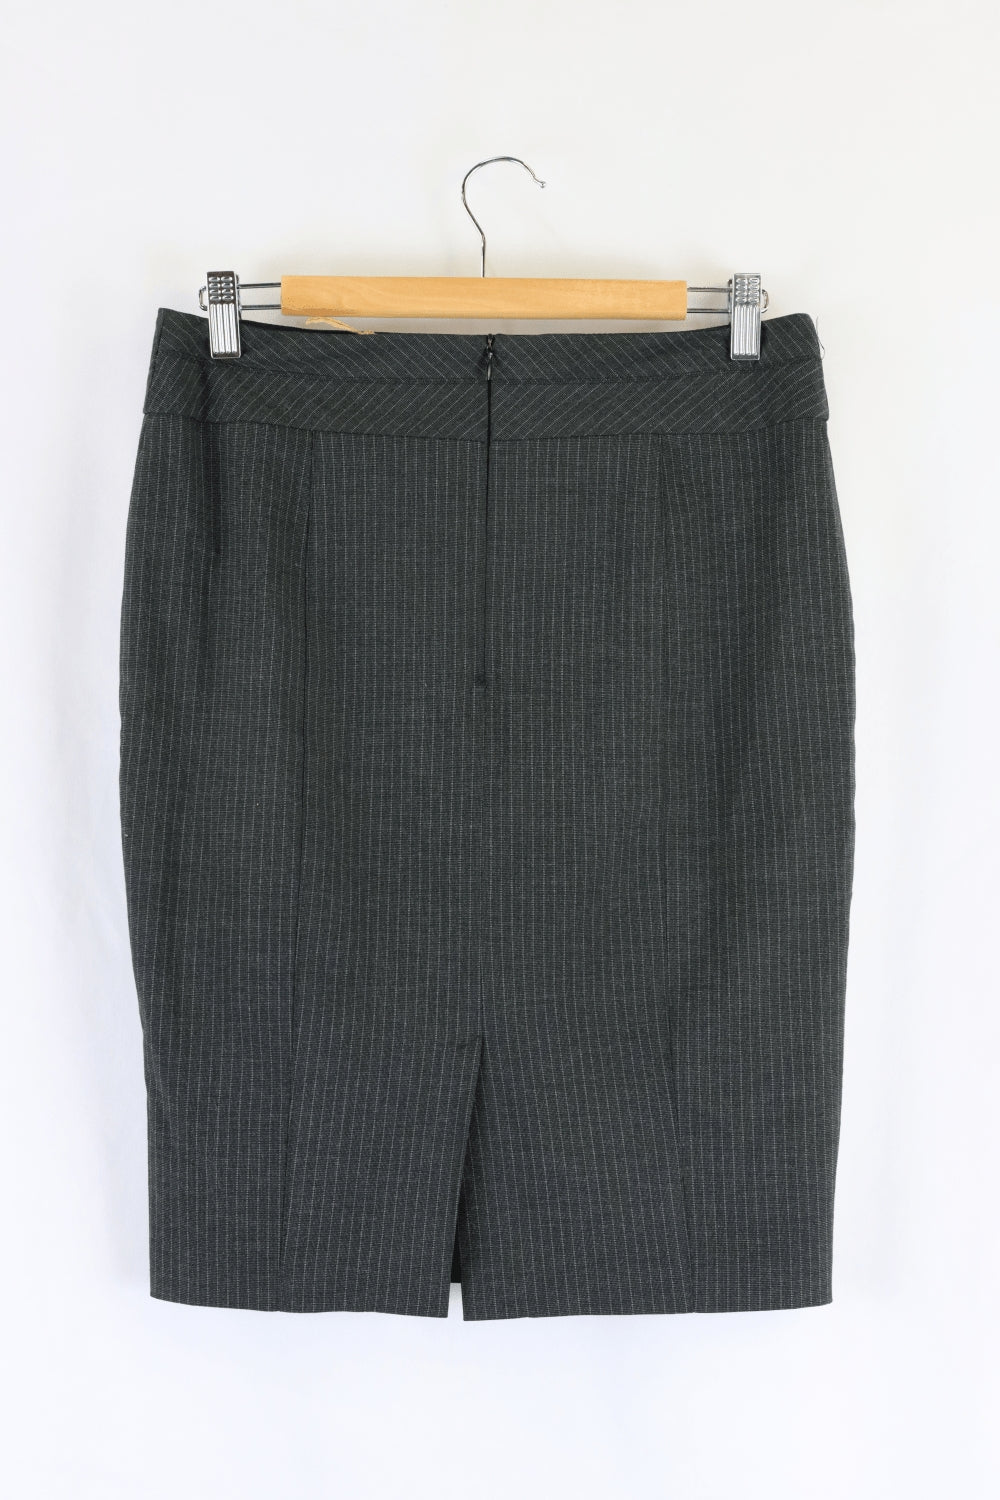 Portmans Grey Pencil Skirt 10